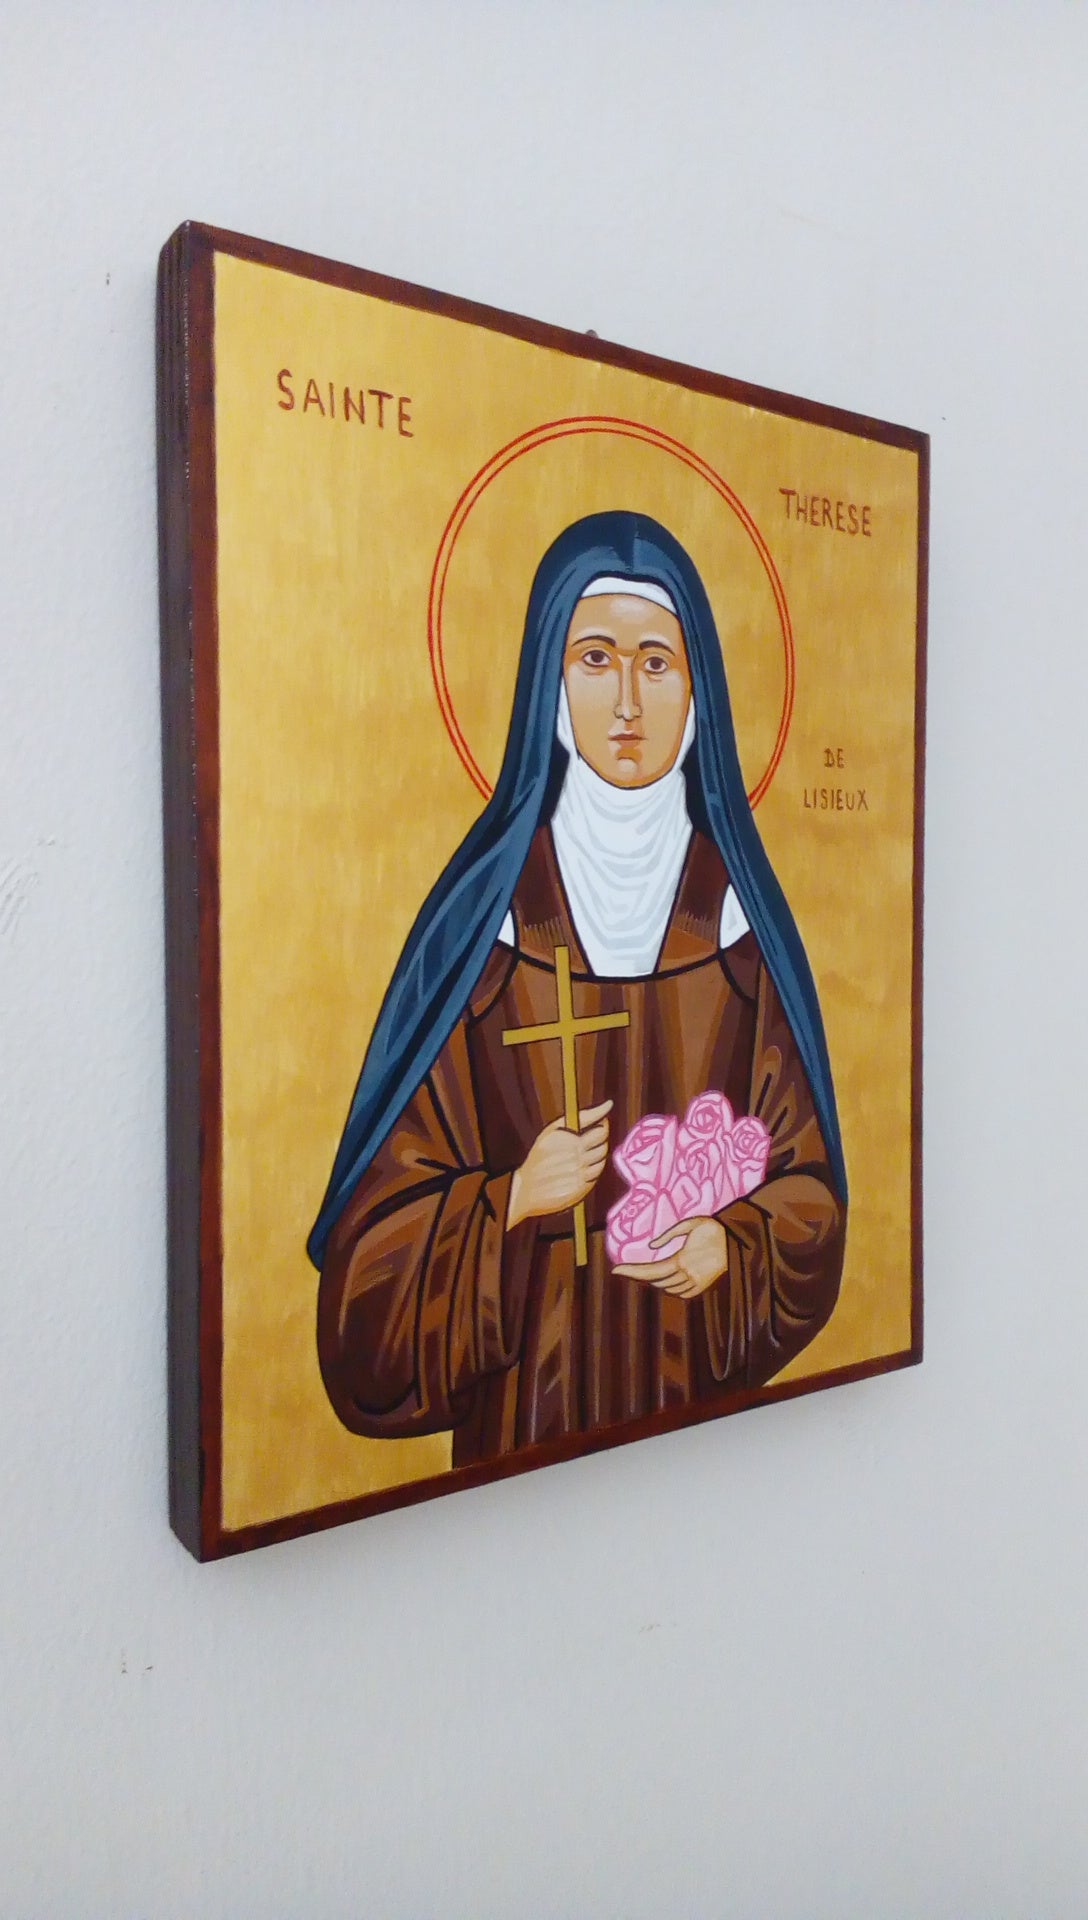 Saint Therese of Lisieux - HandmadeIconsGreece